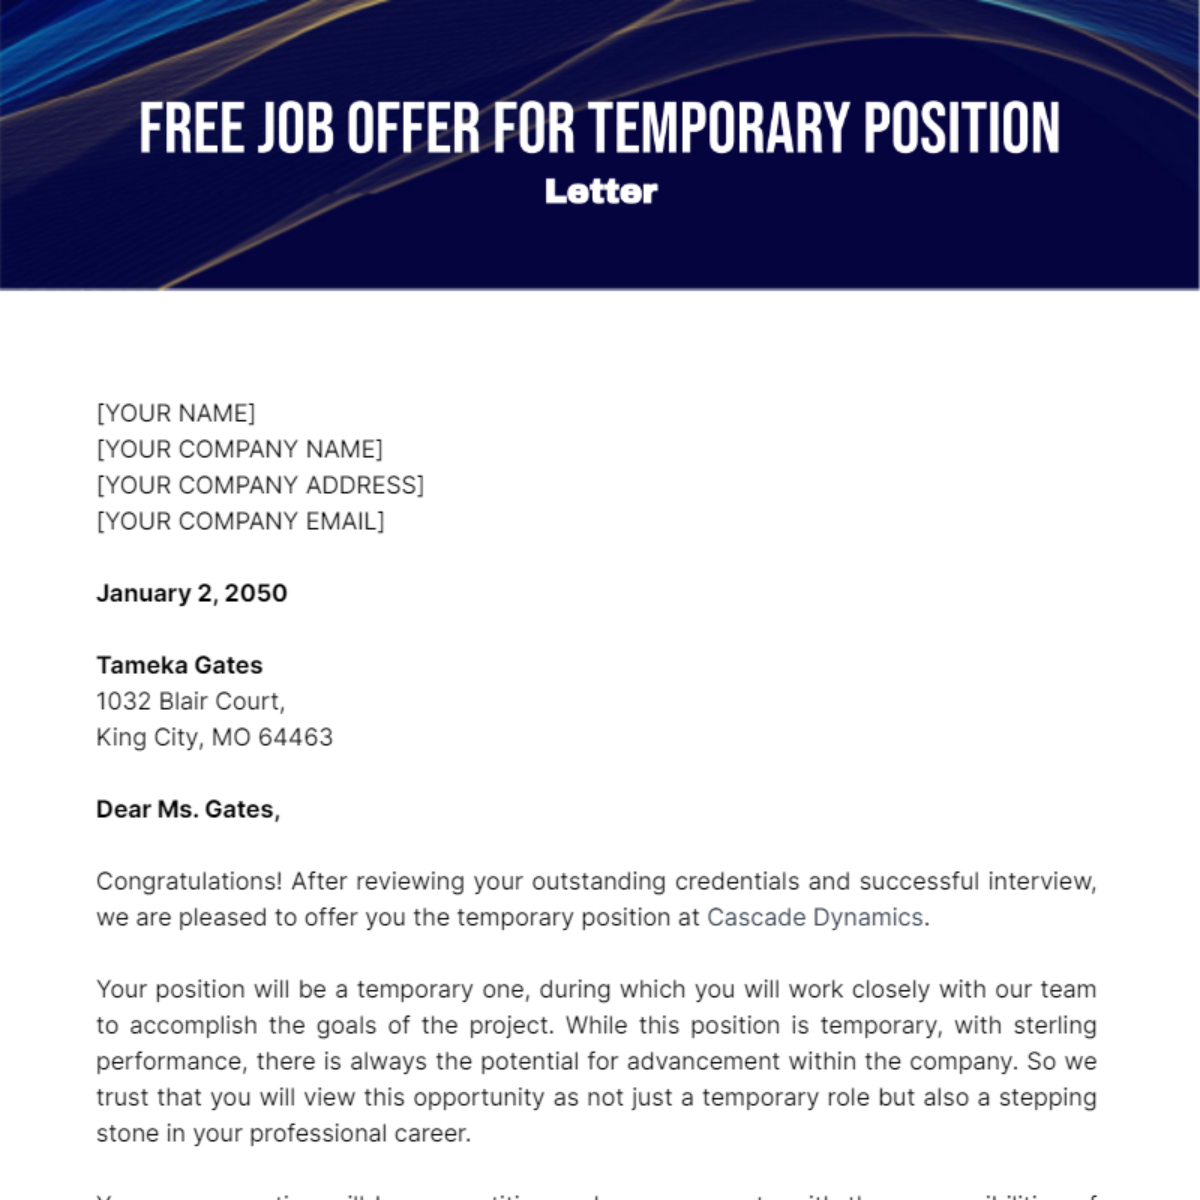 Job Offer Letter for Temporary Position Template